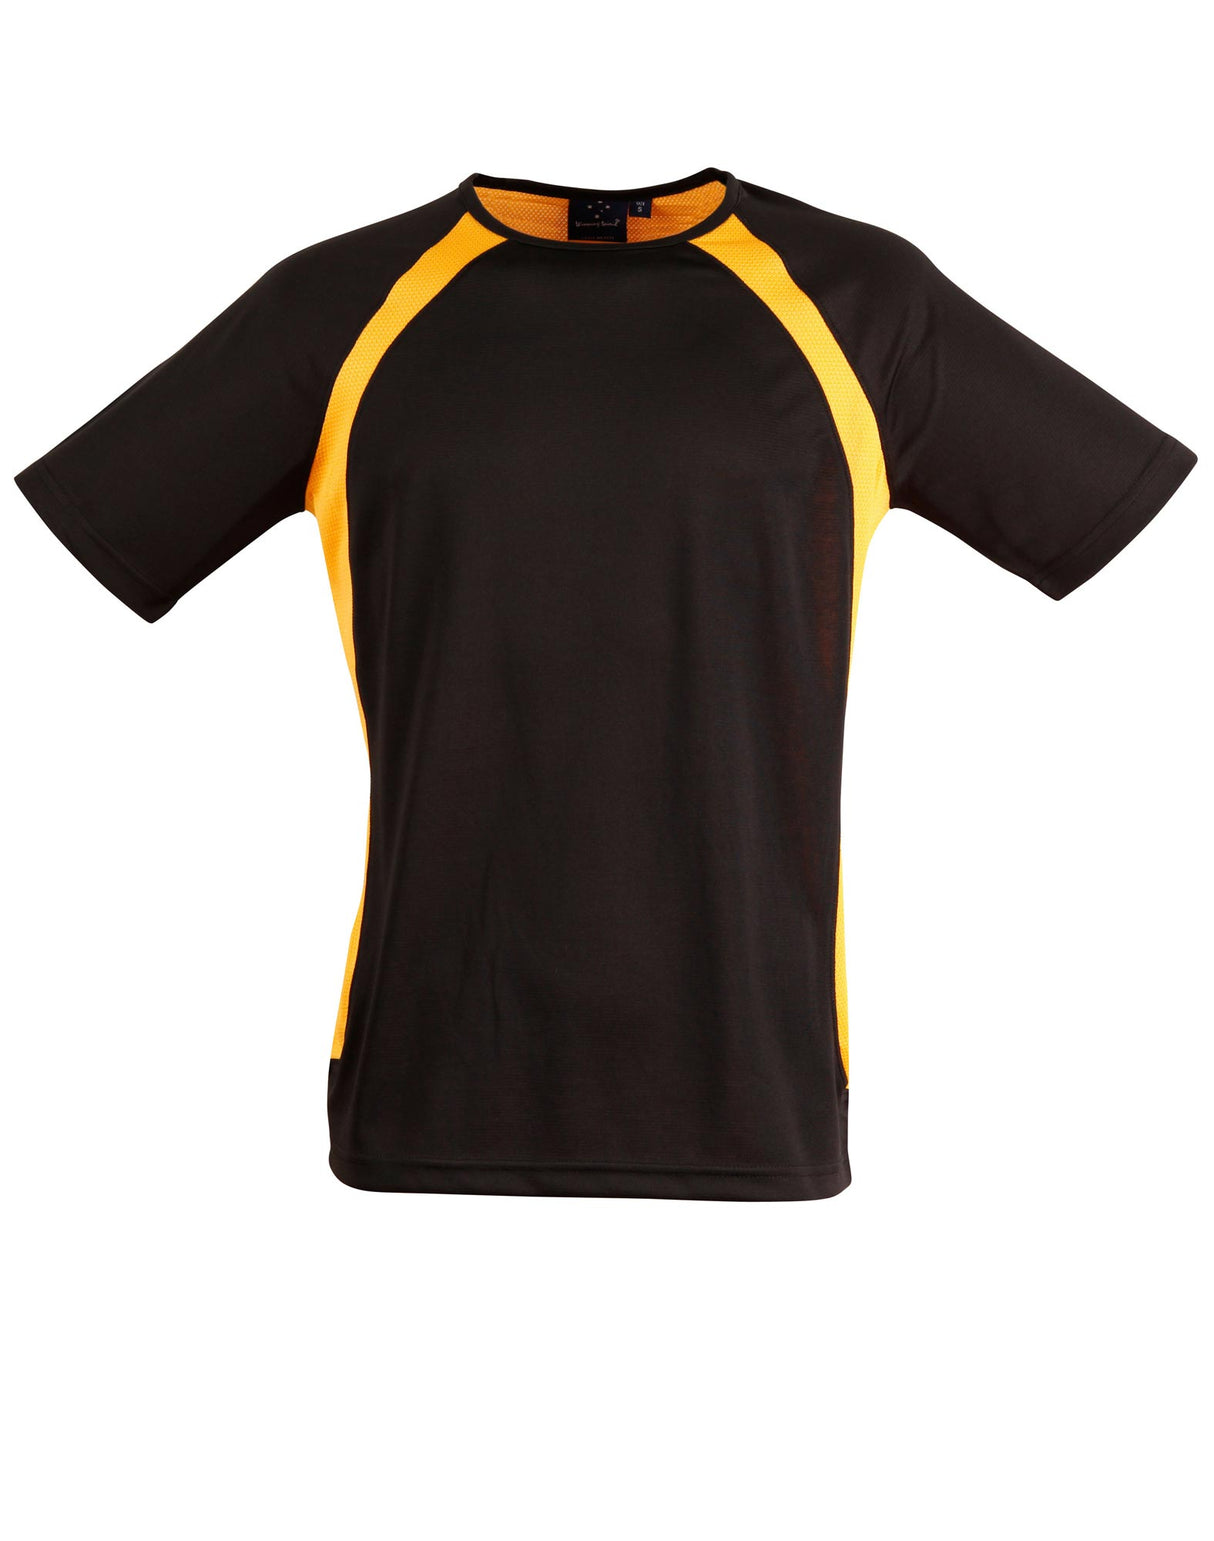 TS71 Sprint CoolDry Athletic Tee Shirt